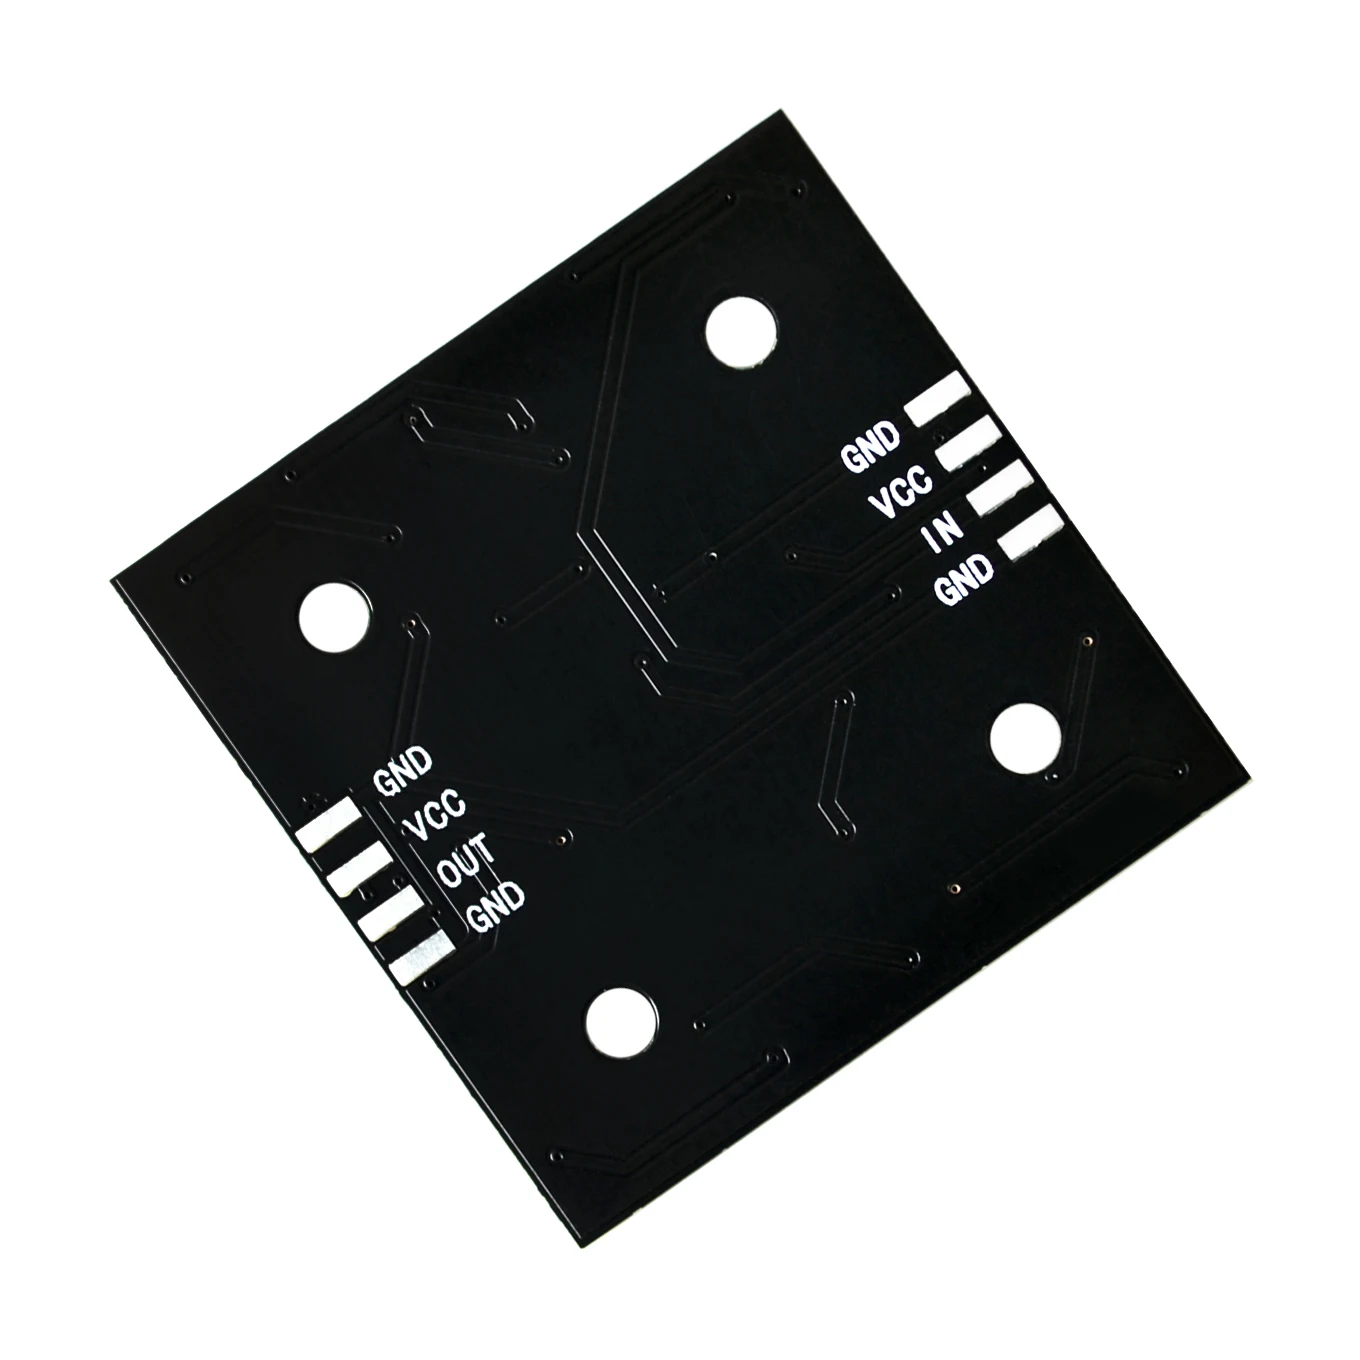 WS2812 светодиодный 5050 RGB 5x5, 5*5 см 25 СВЕТОДИОДНЫЙ матричный модуль для Arduino